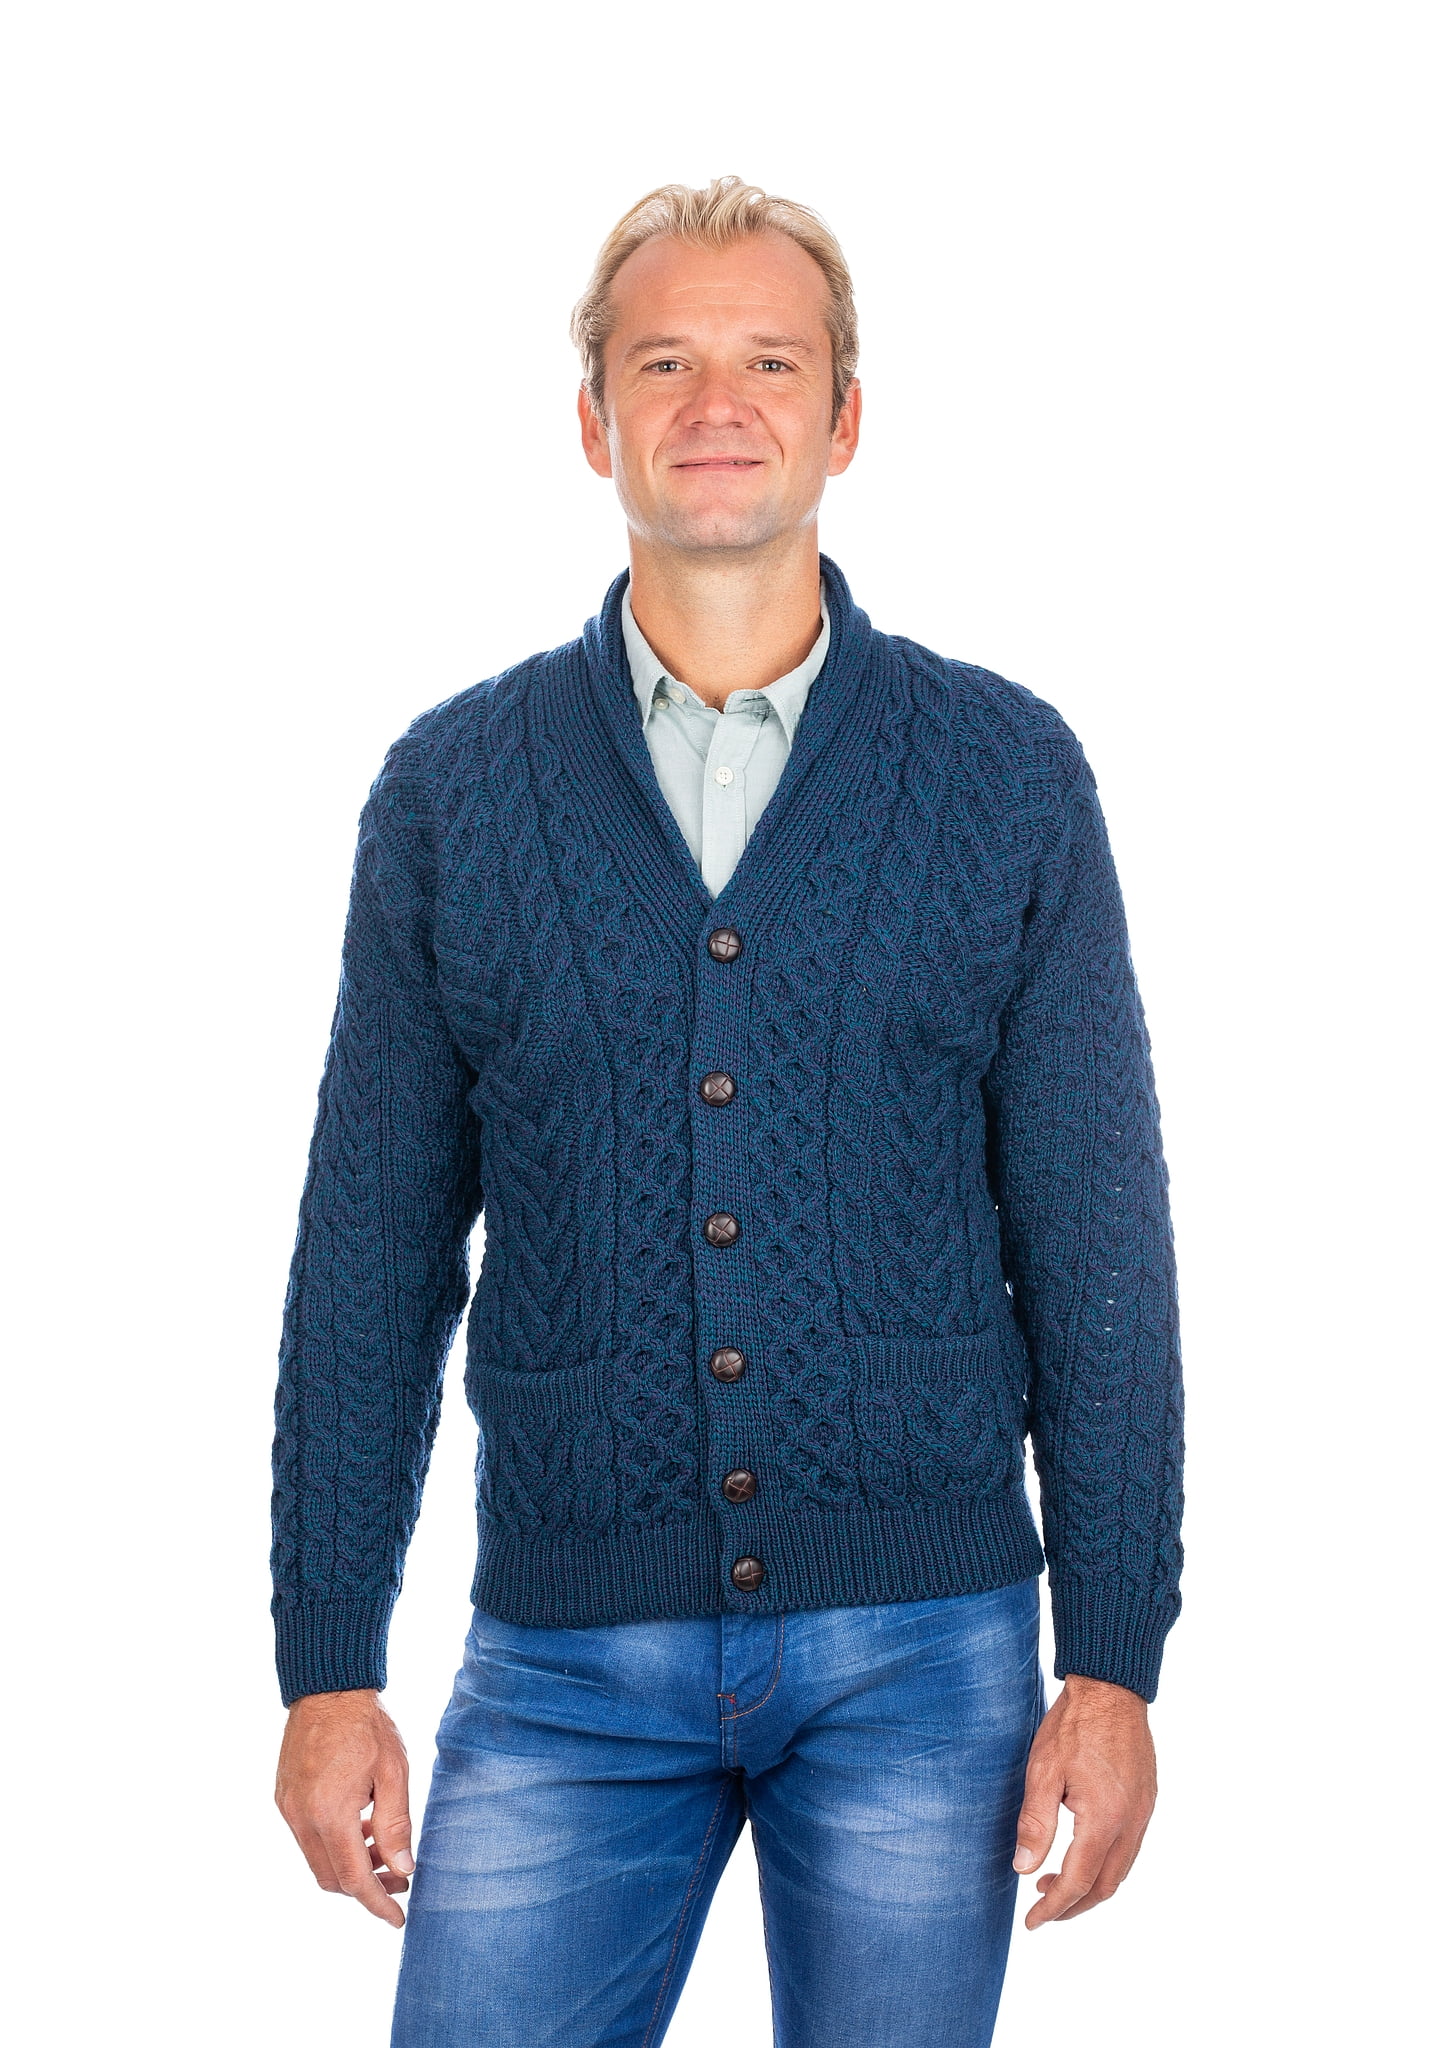 SAOL - Irish Cardigan Sweater for Men 100% Merino Wool Cable Knit ...